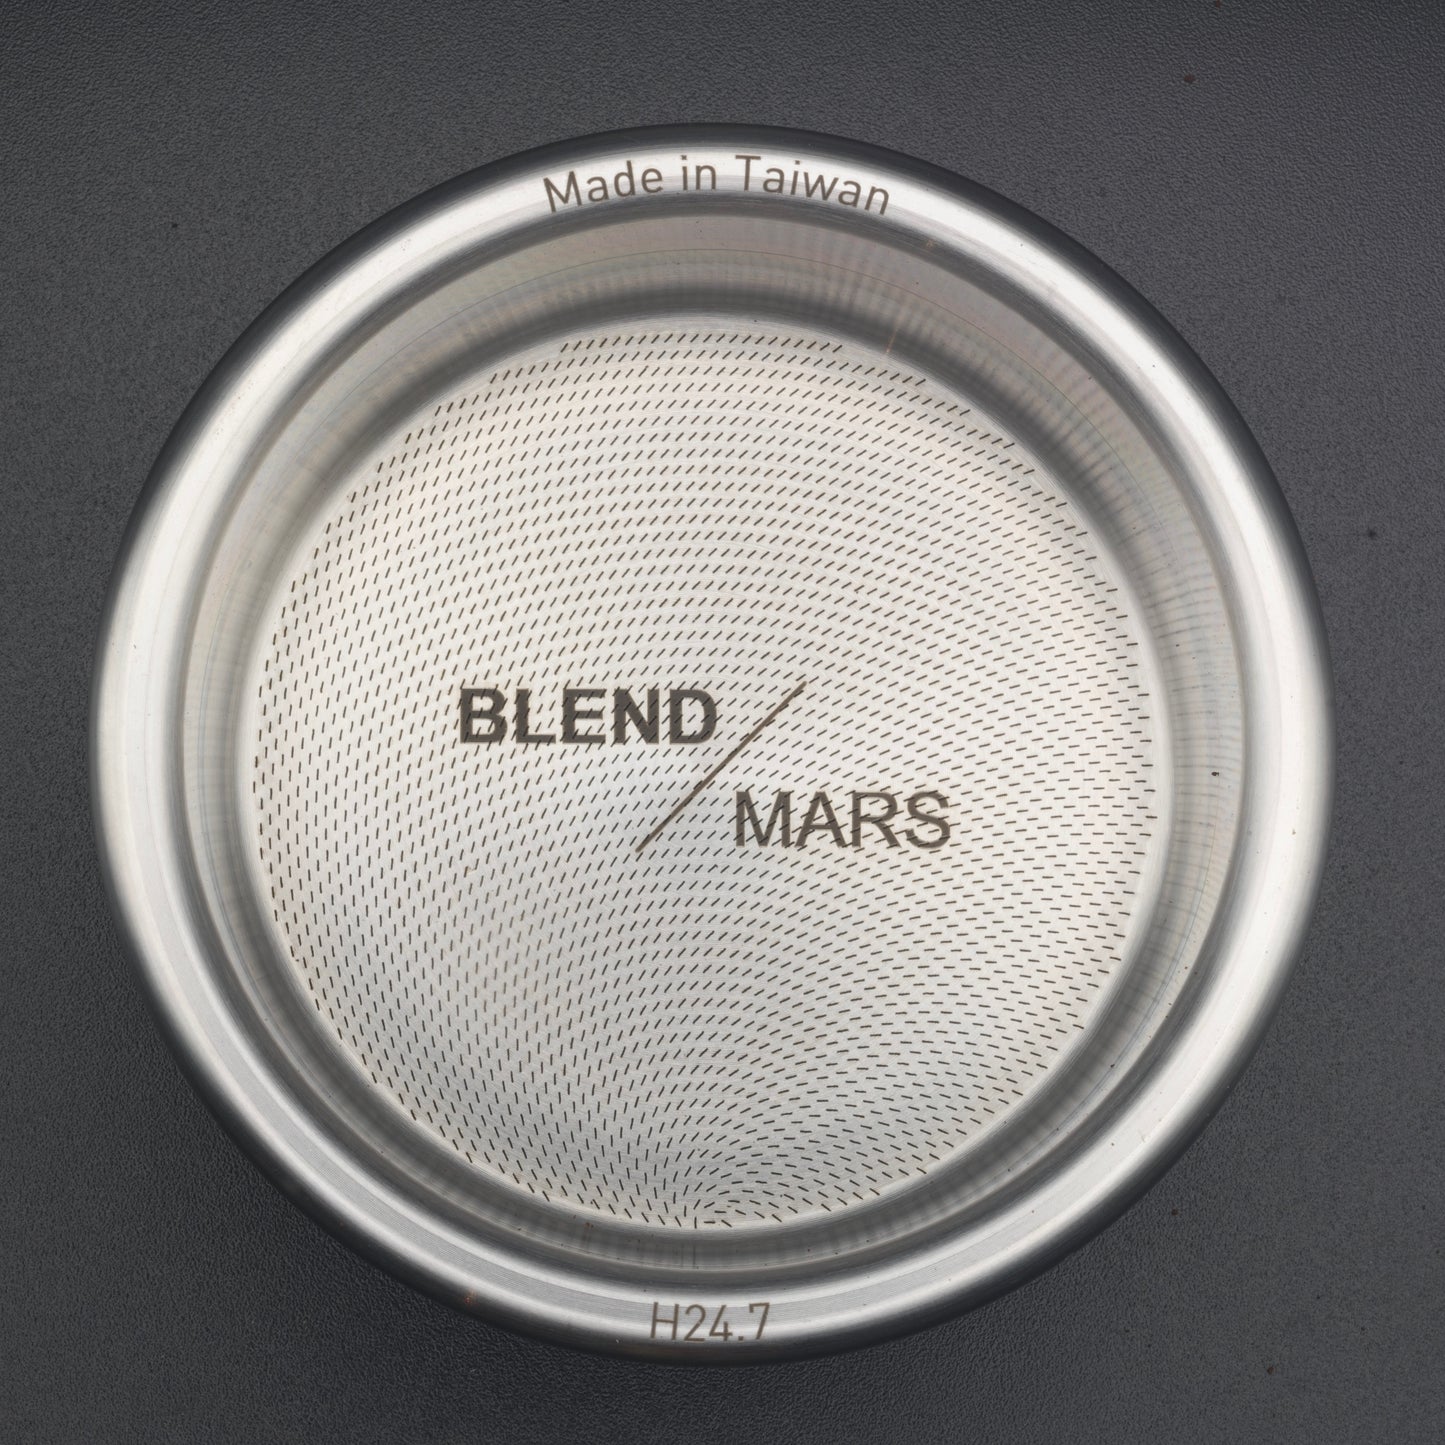 BLEND/MARS_H24.7/18g